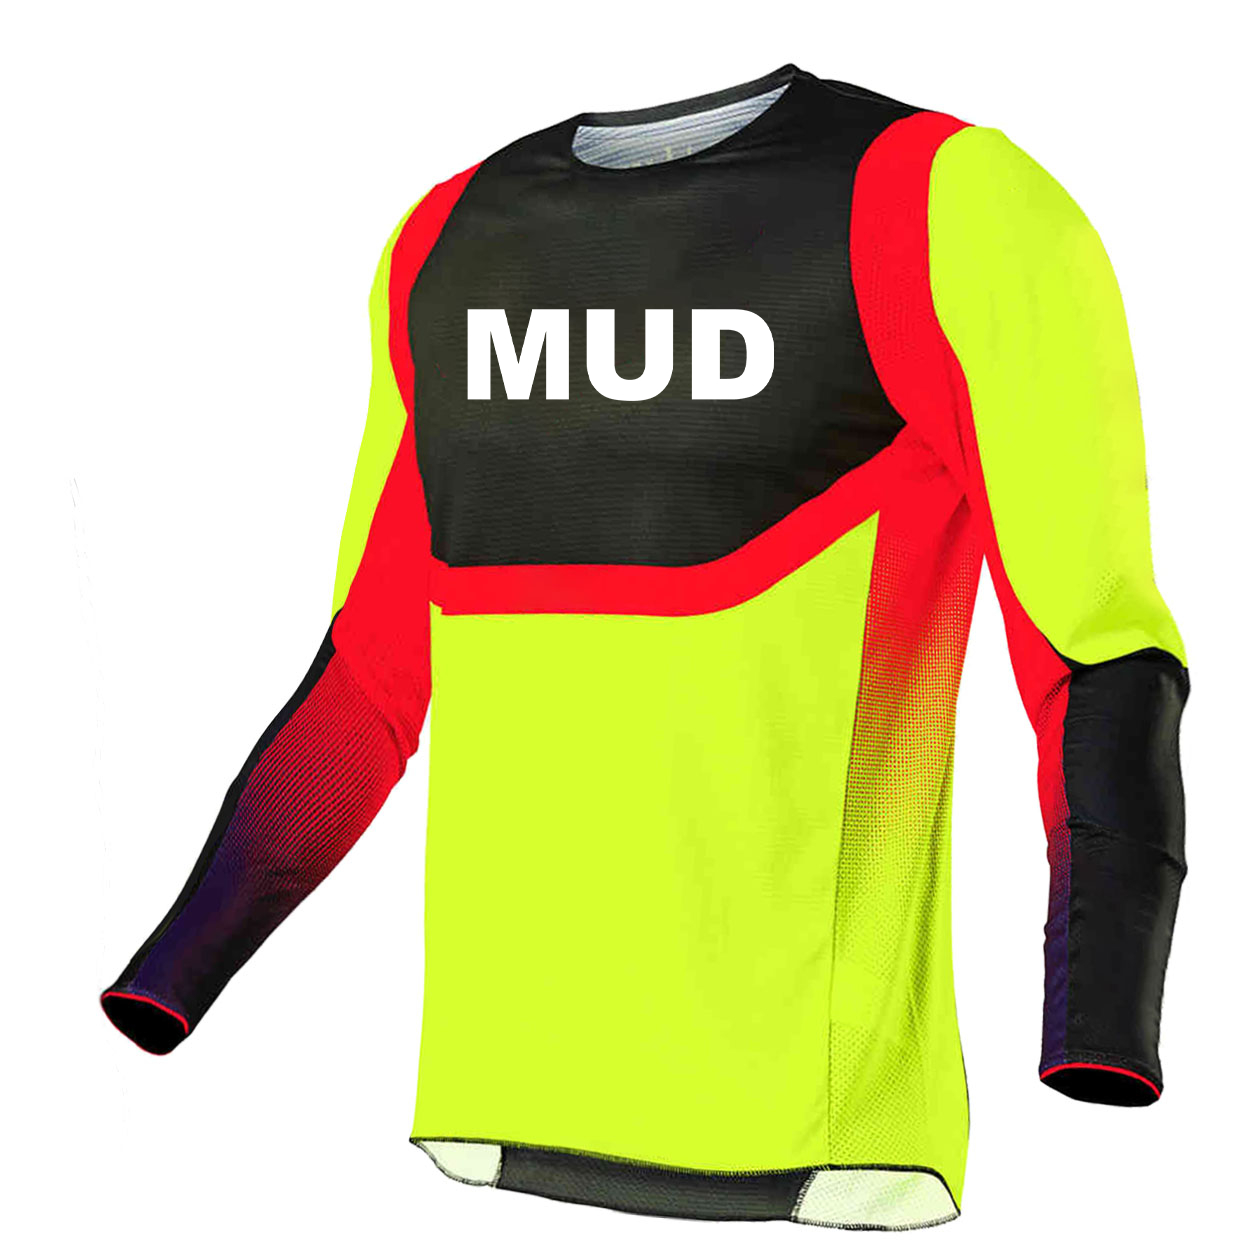 Mud Brand Logo Classic Performance Jersey Long Sleeve Shirt Black/Yellow/Red